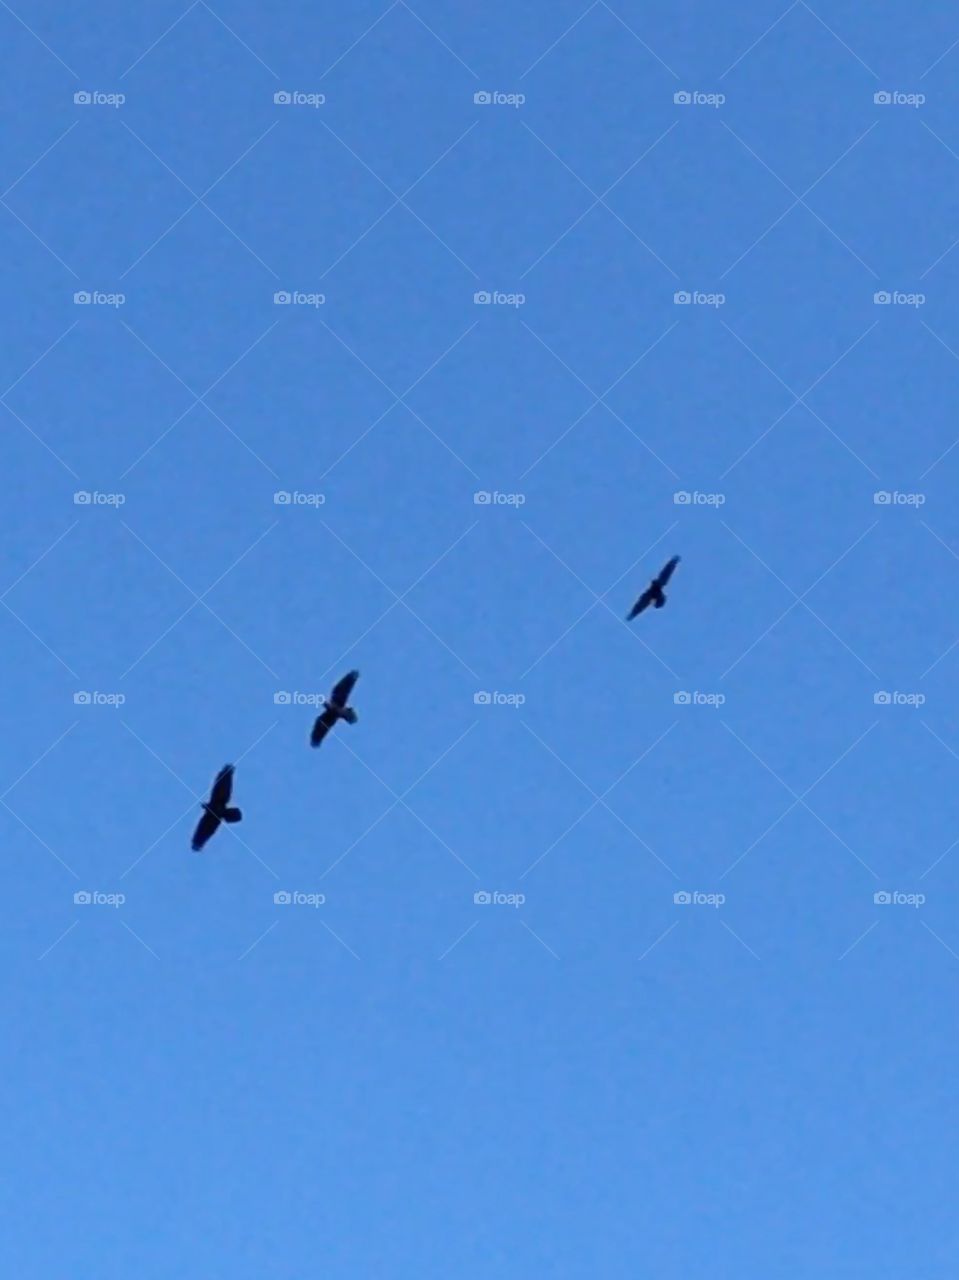 Crows in flight